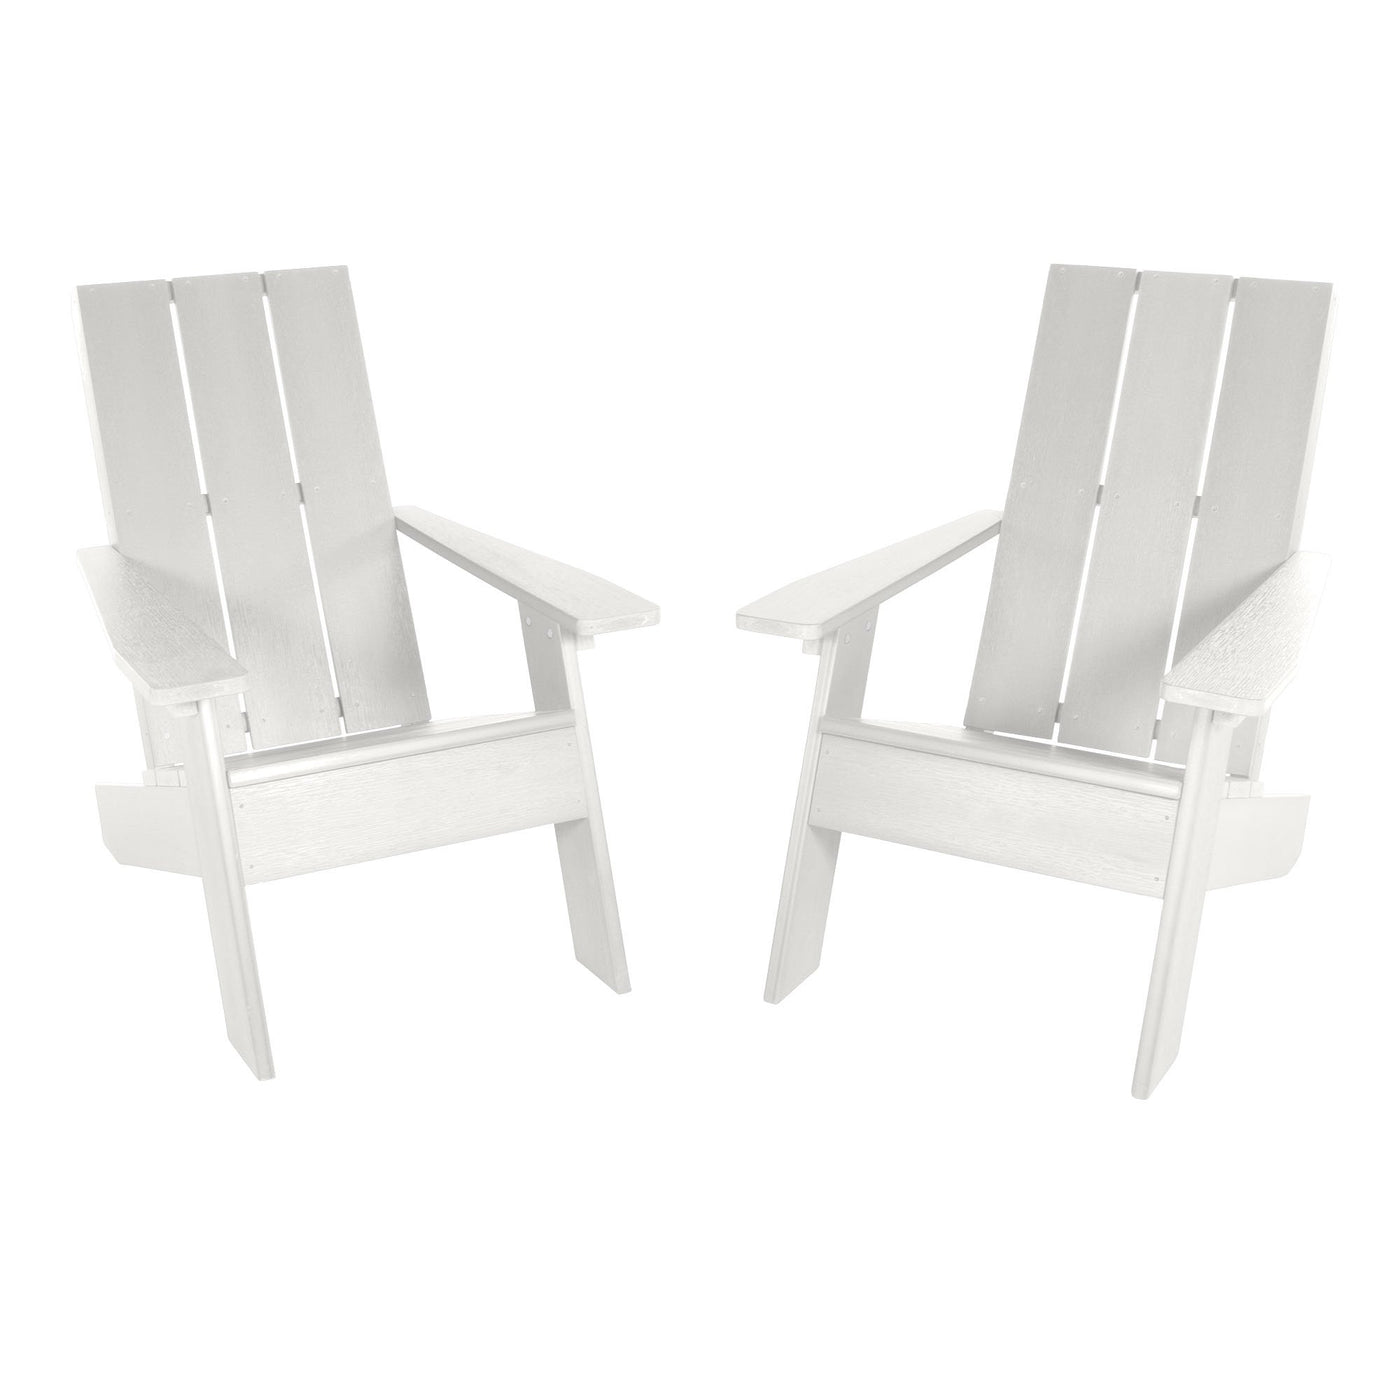 Two Italica Adirondack chairs in White 